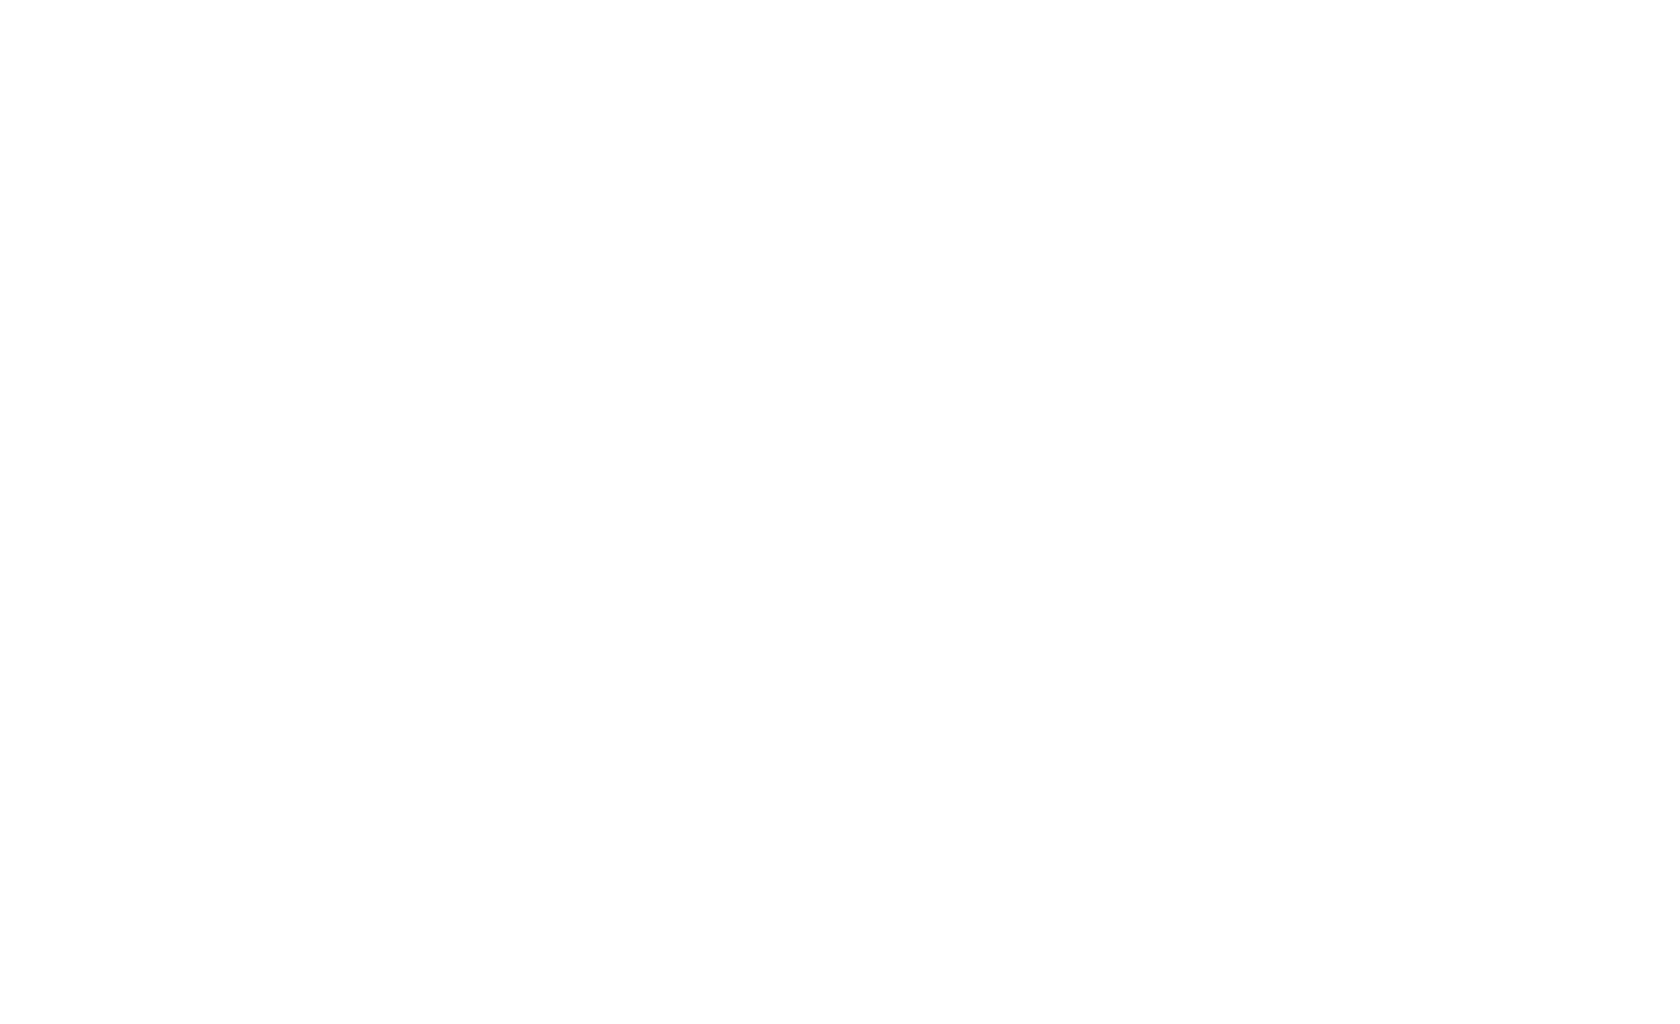 Smart Travel - подорожі із сенсом - travel with meaning